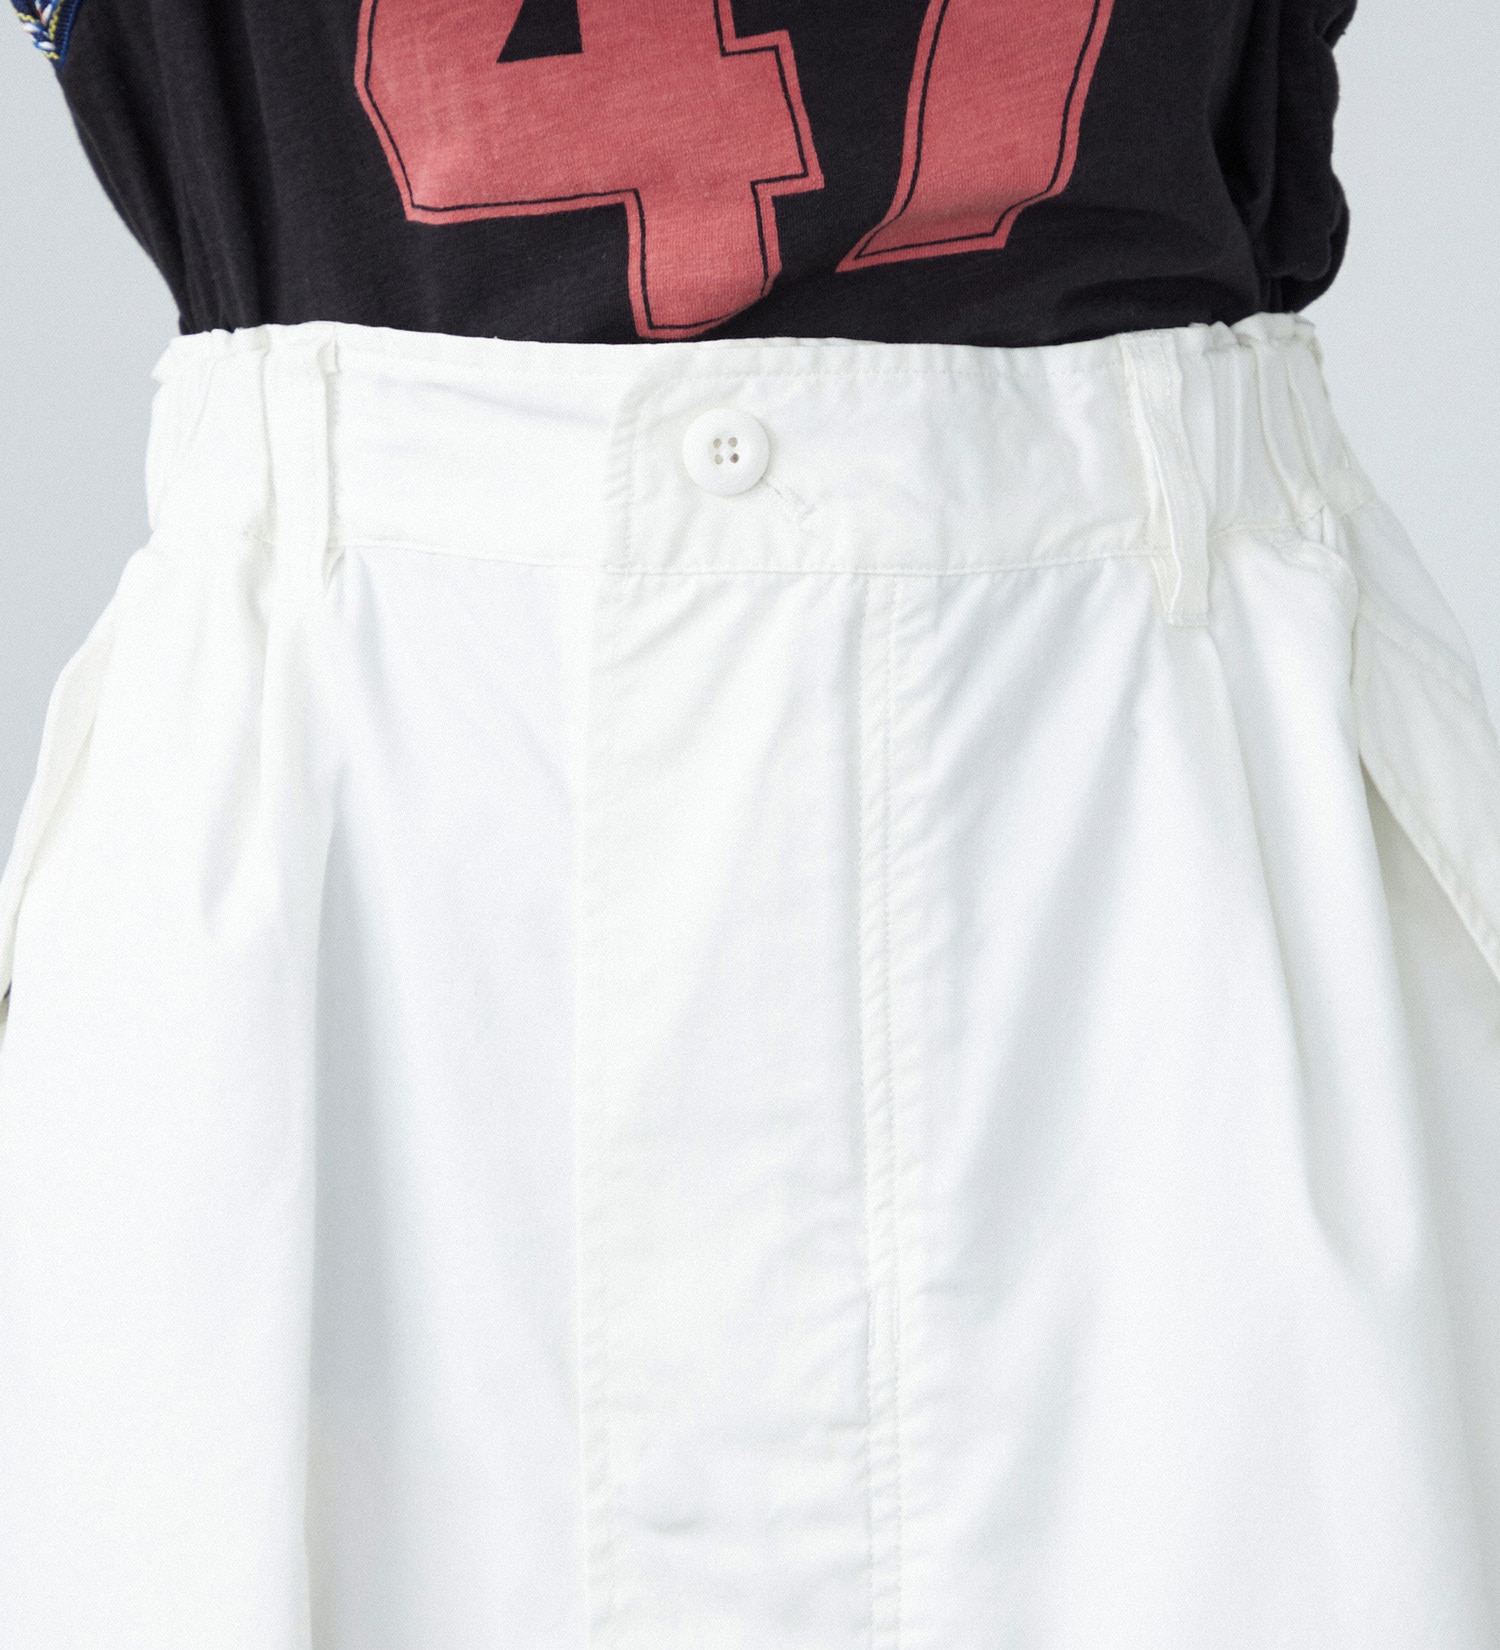 ALPHA(アルファ)のモッズミリタリースカート|スカート/スカート/レディース|オフホワイト